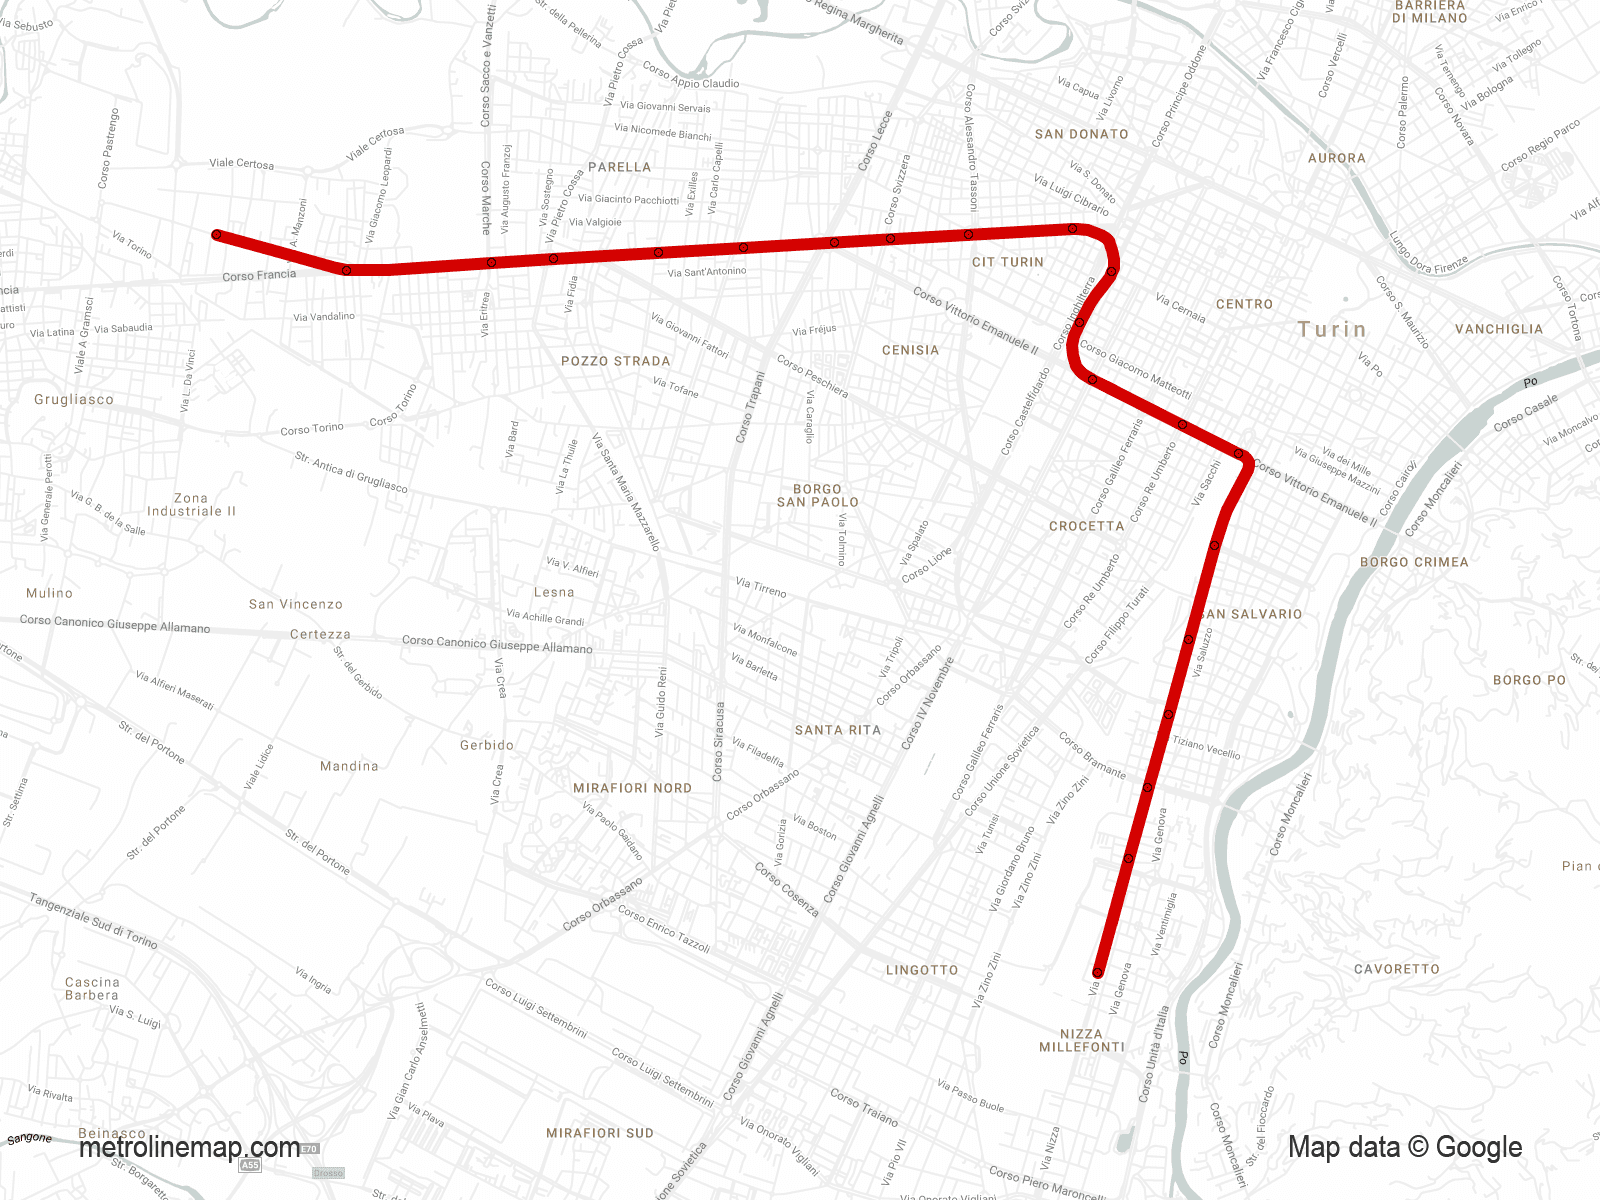 Turin metro system map